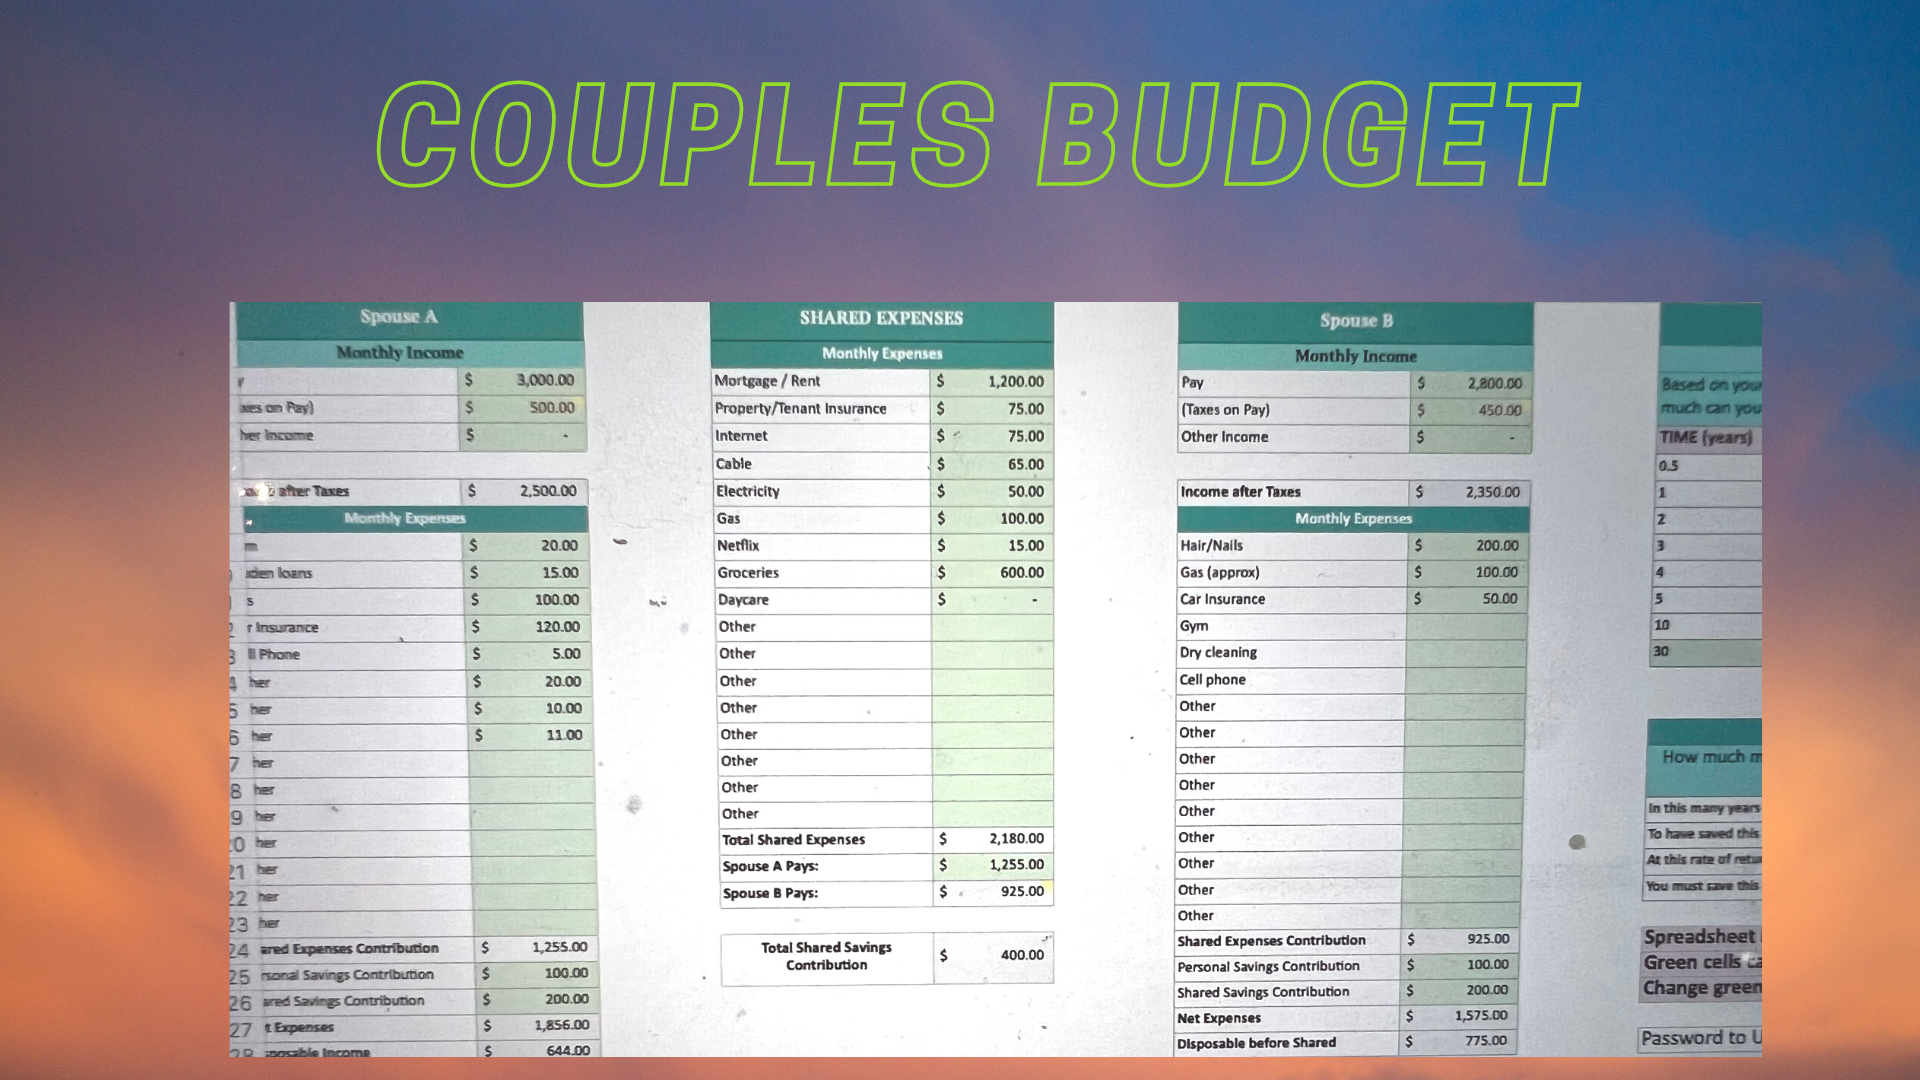 COINZ® Couples Budget